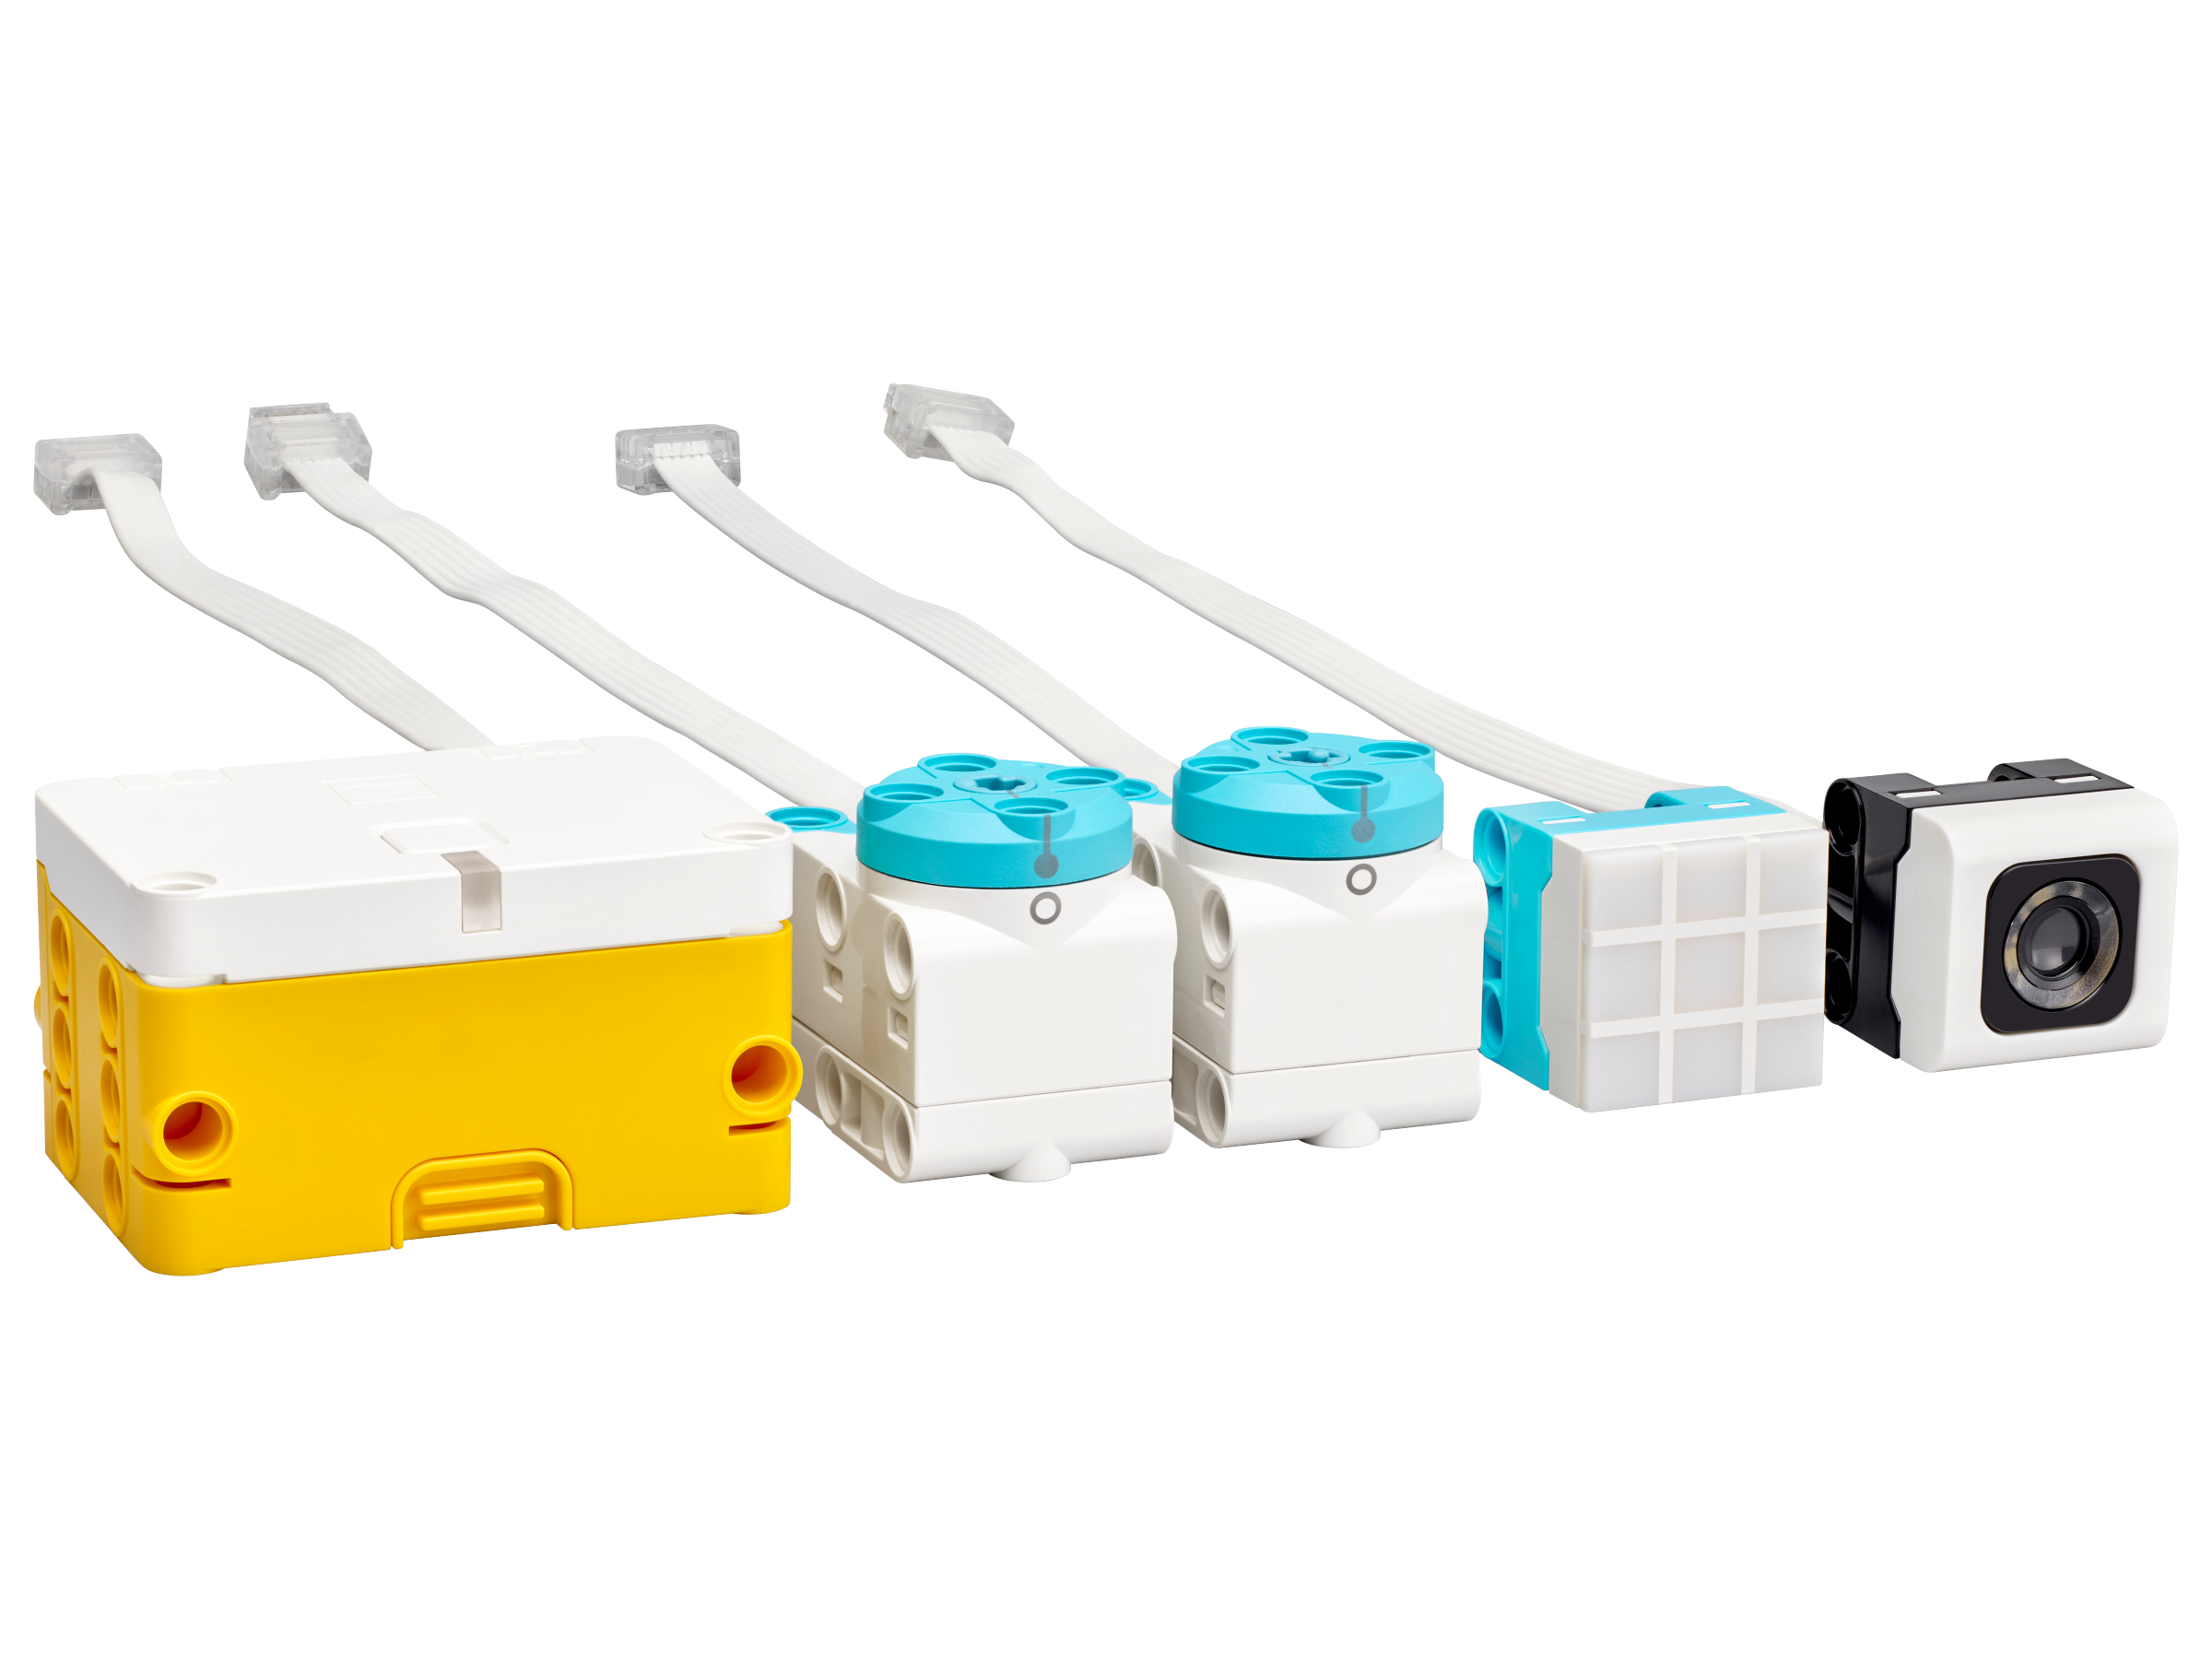 LEGO Education SPIKE Essential motors and sensors